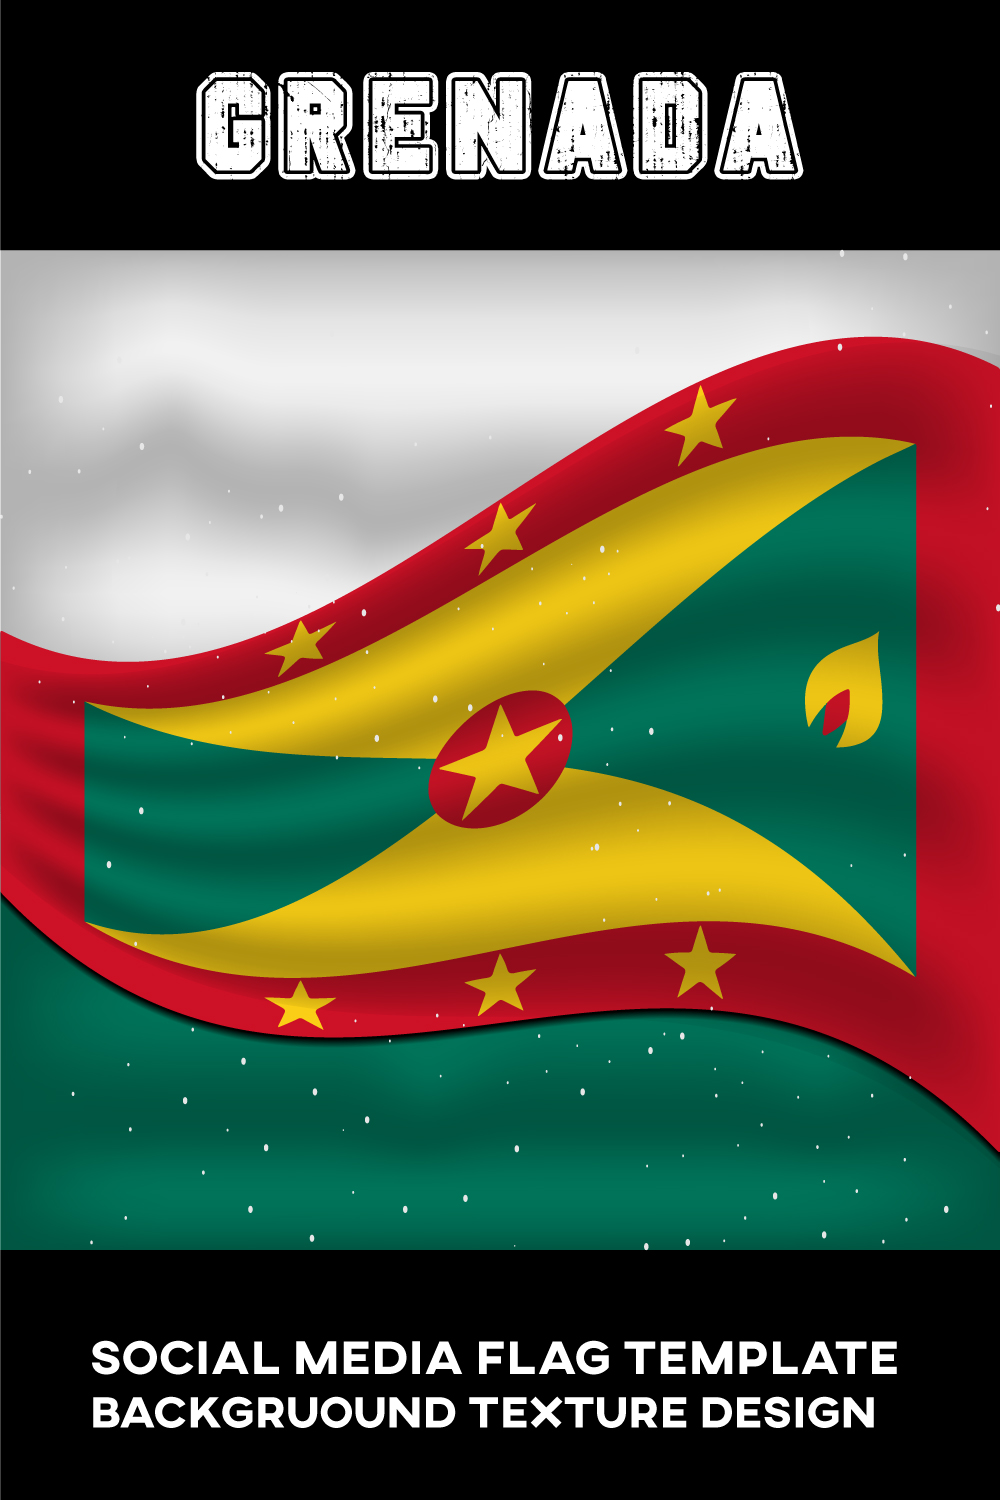 Unique image of the flag of Grenada.